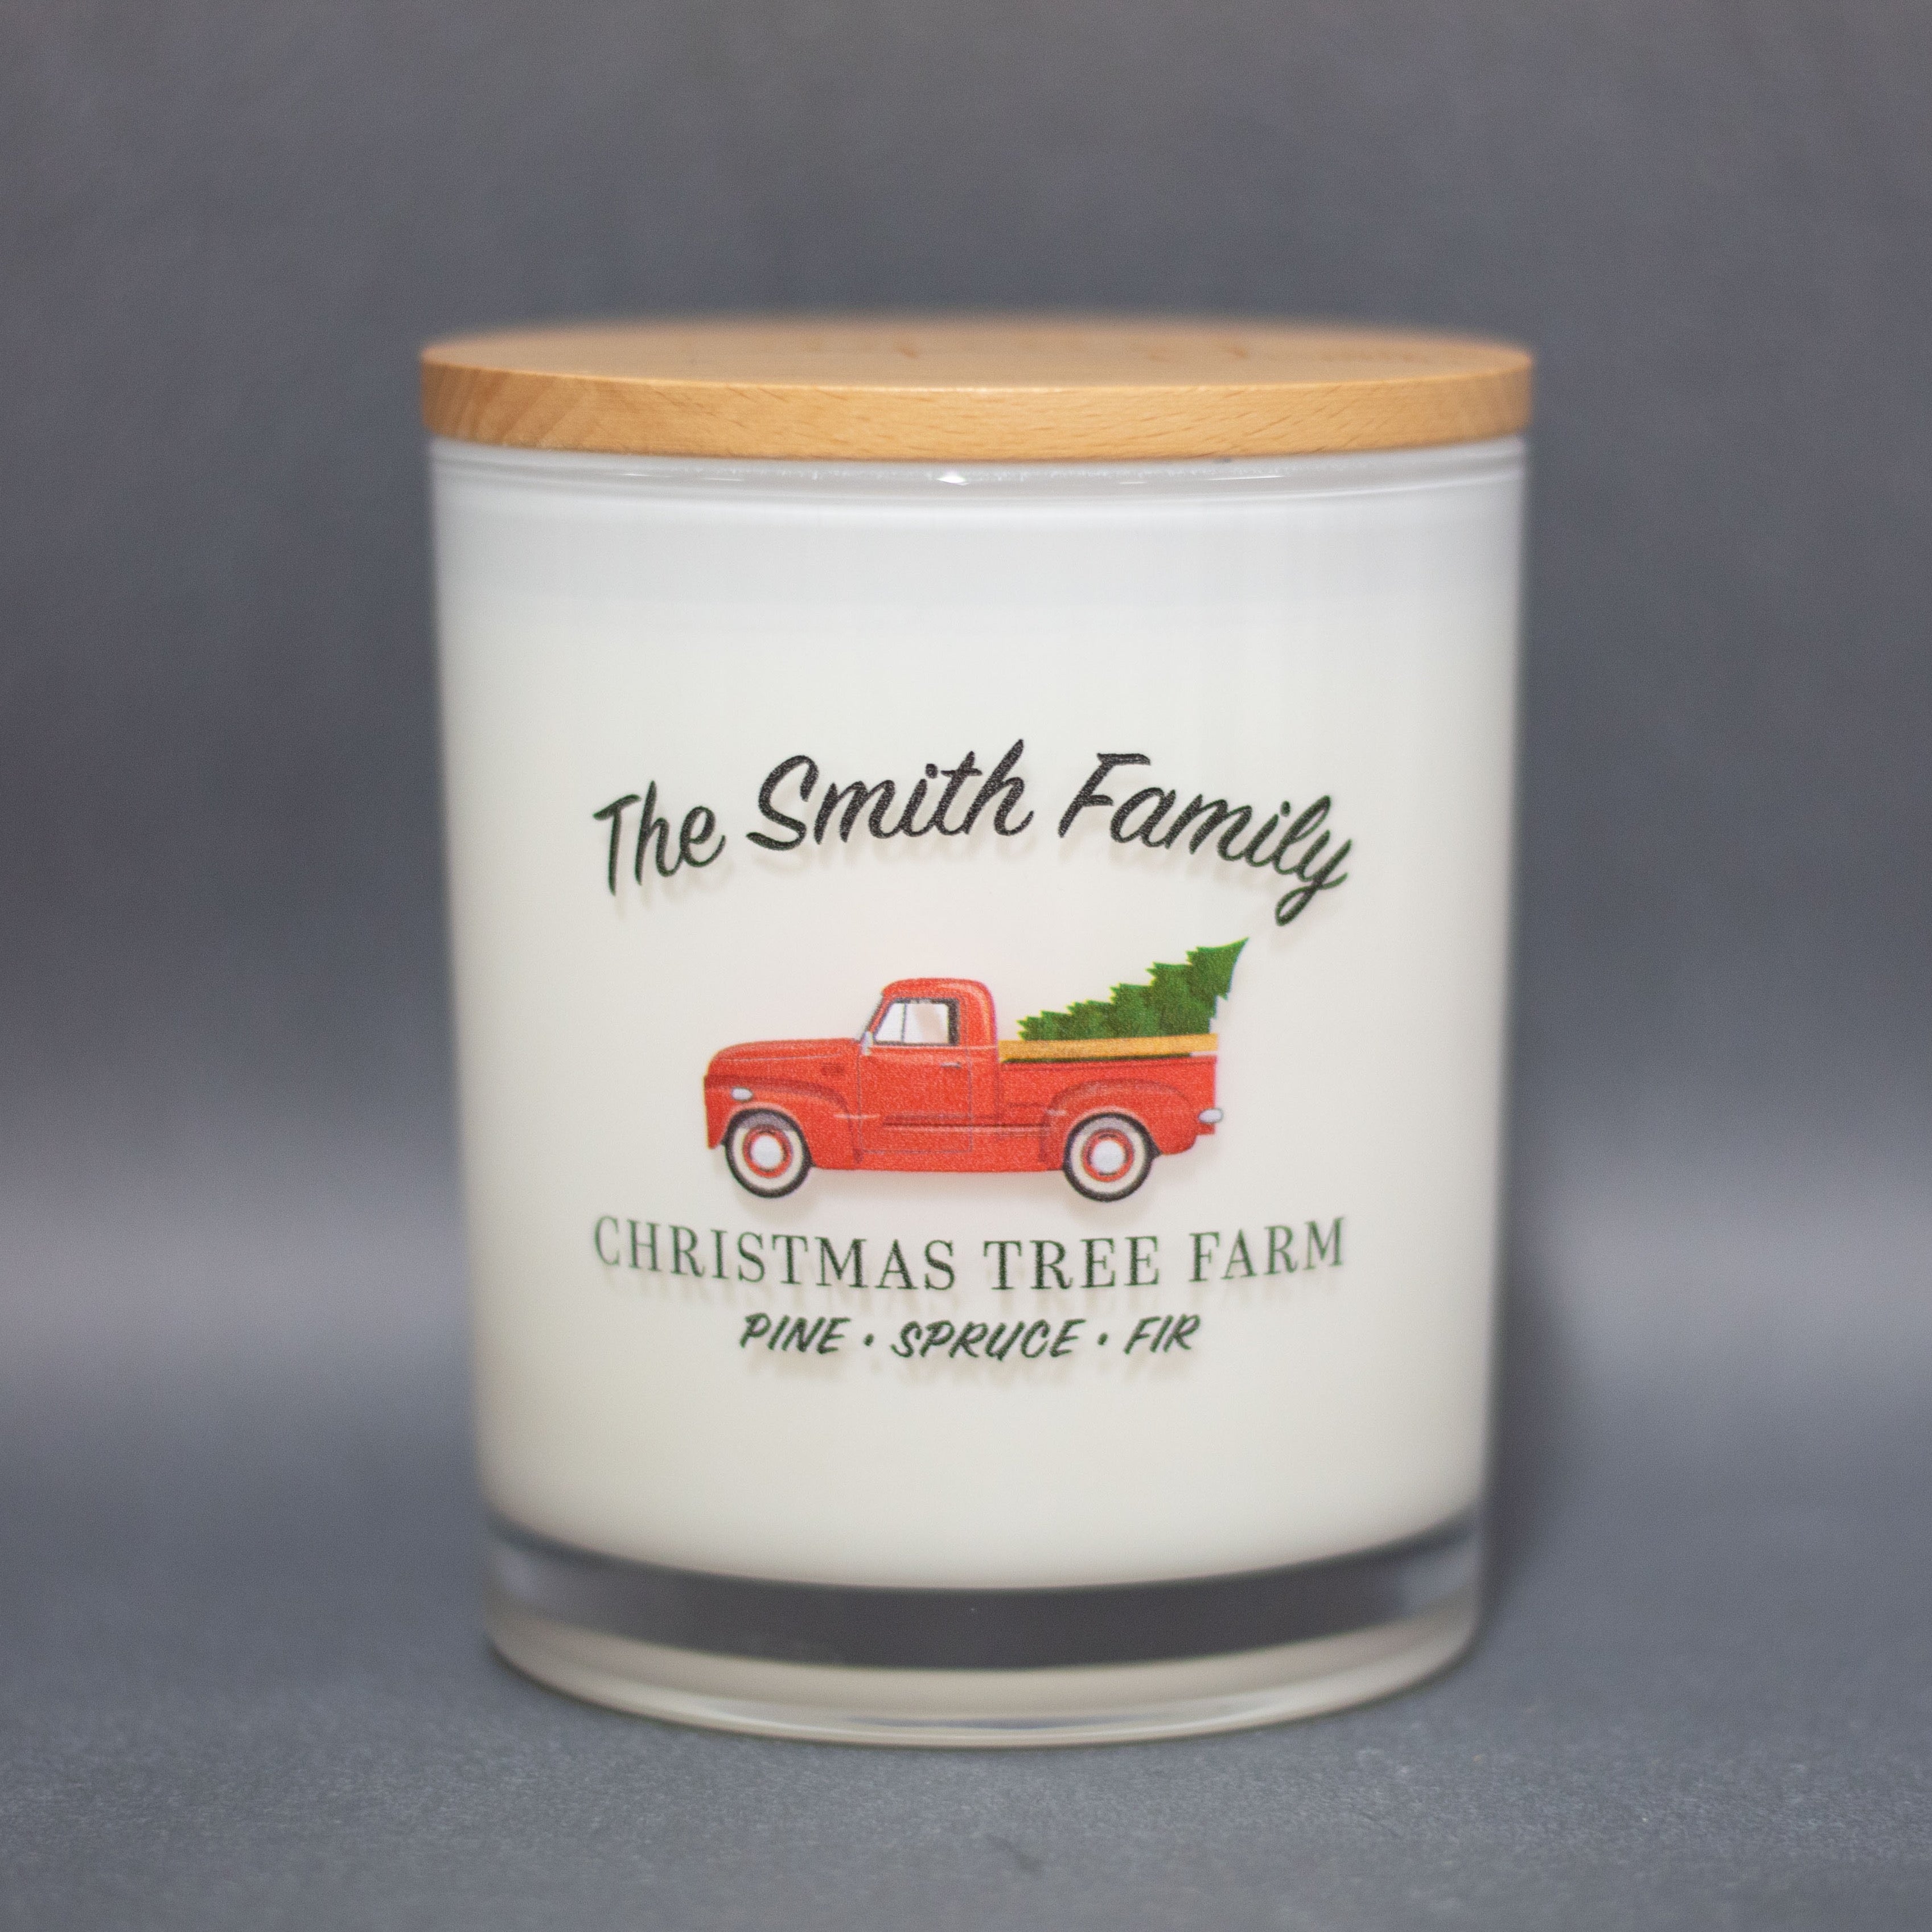 Christmas tree farm printed candle 